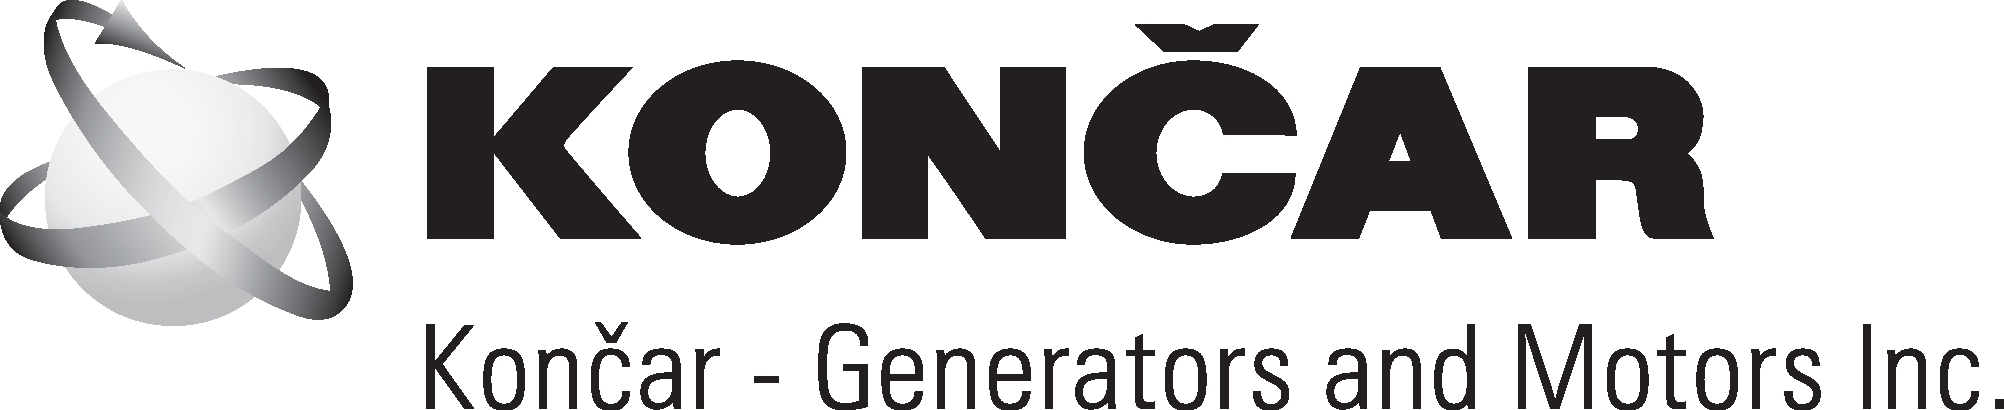 Koncar Generators and Motors Inc.